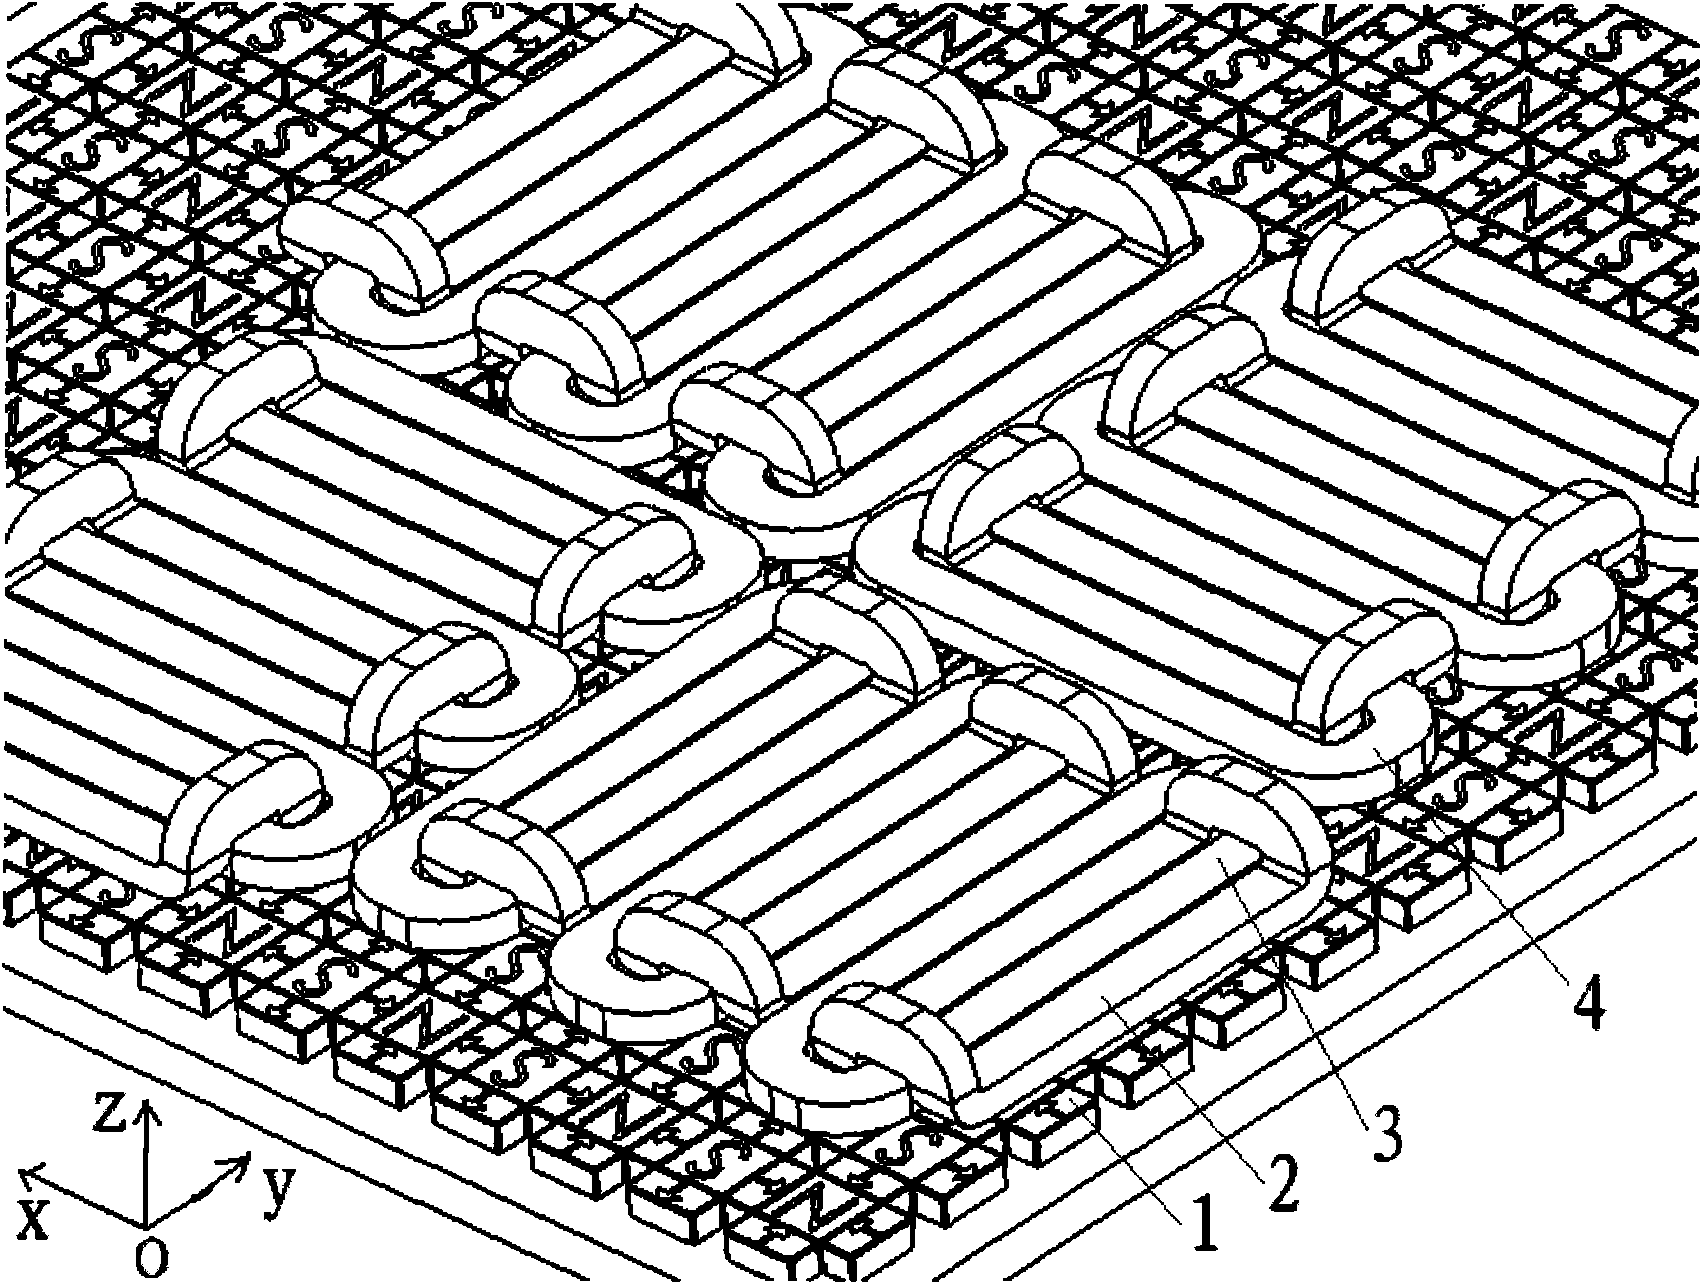 Planar motor adopting groove-type coil